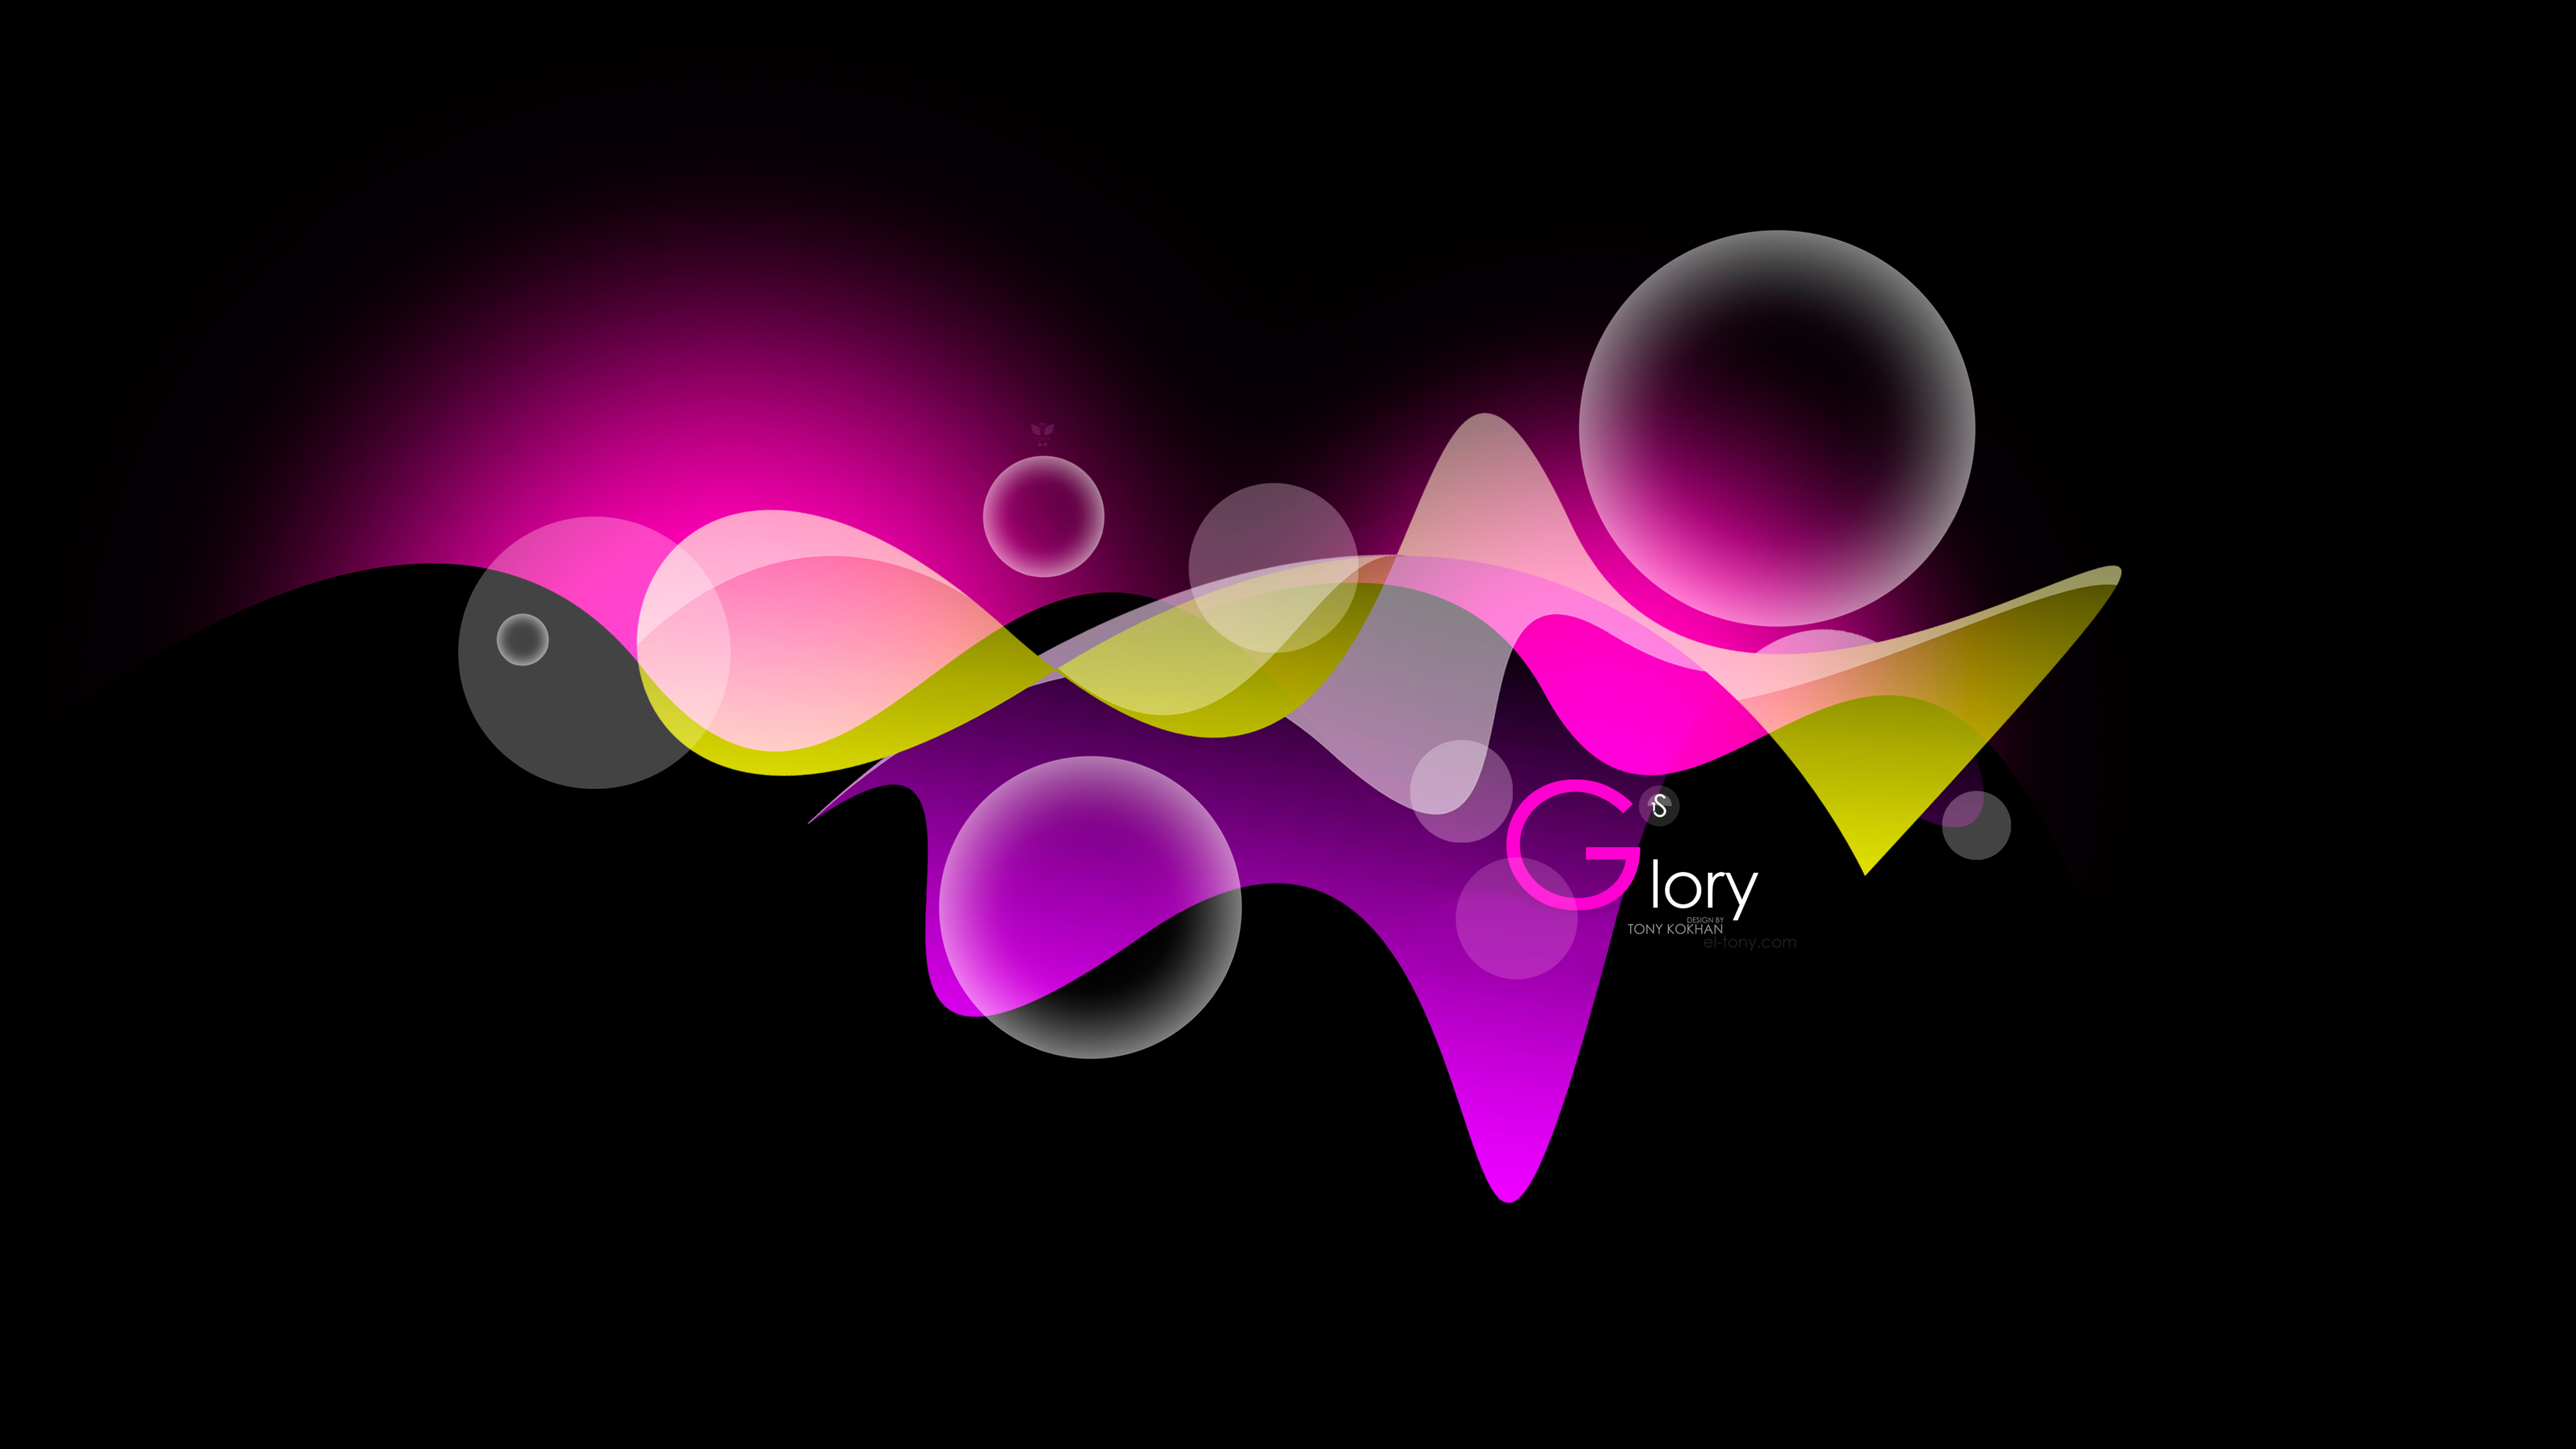 Glory-Simple-Creative-Super-Abstract-Aerography-Waves-Bubbles-DigitalAaTtz-PplYy